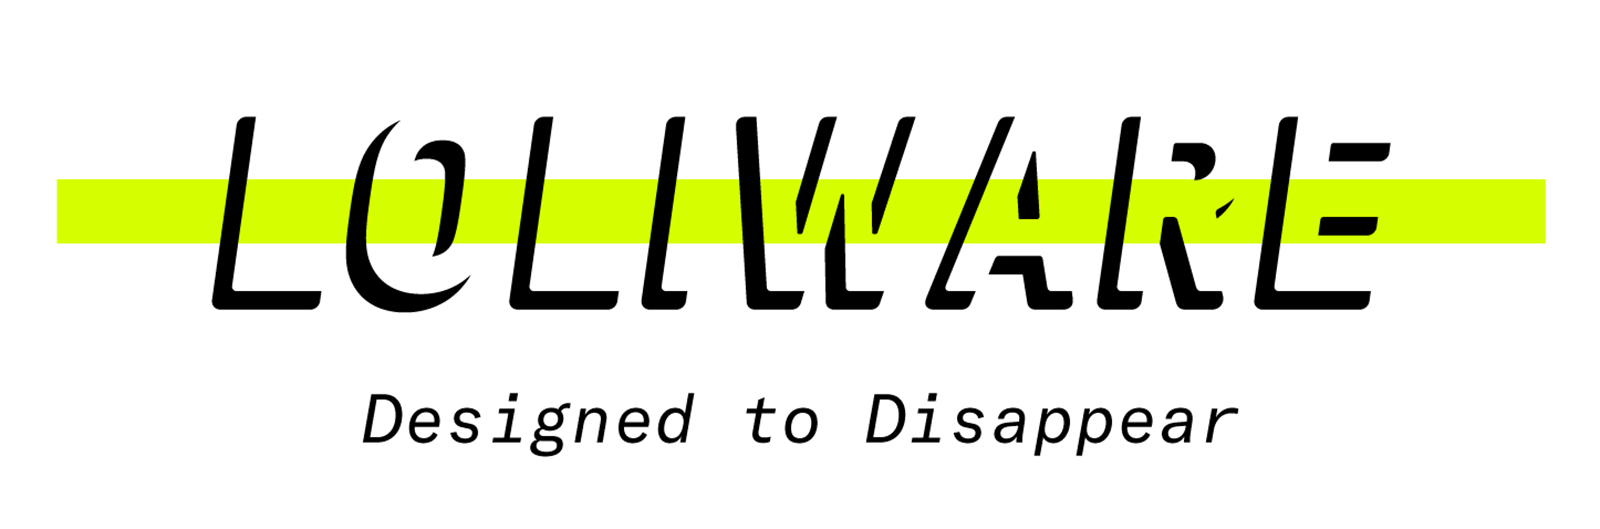 Loliware手机品牌启用全新的品牌VI形象设计-深圳VI设计1